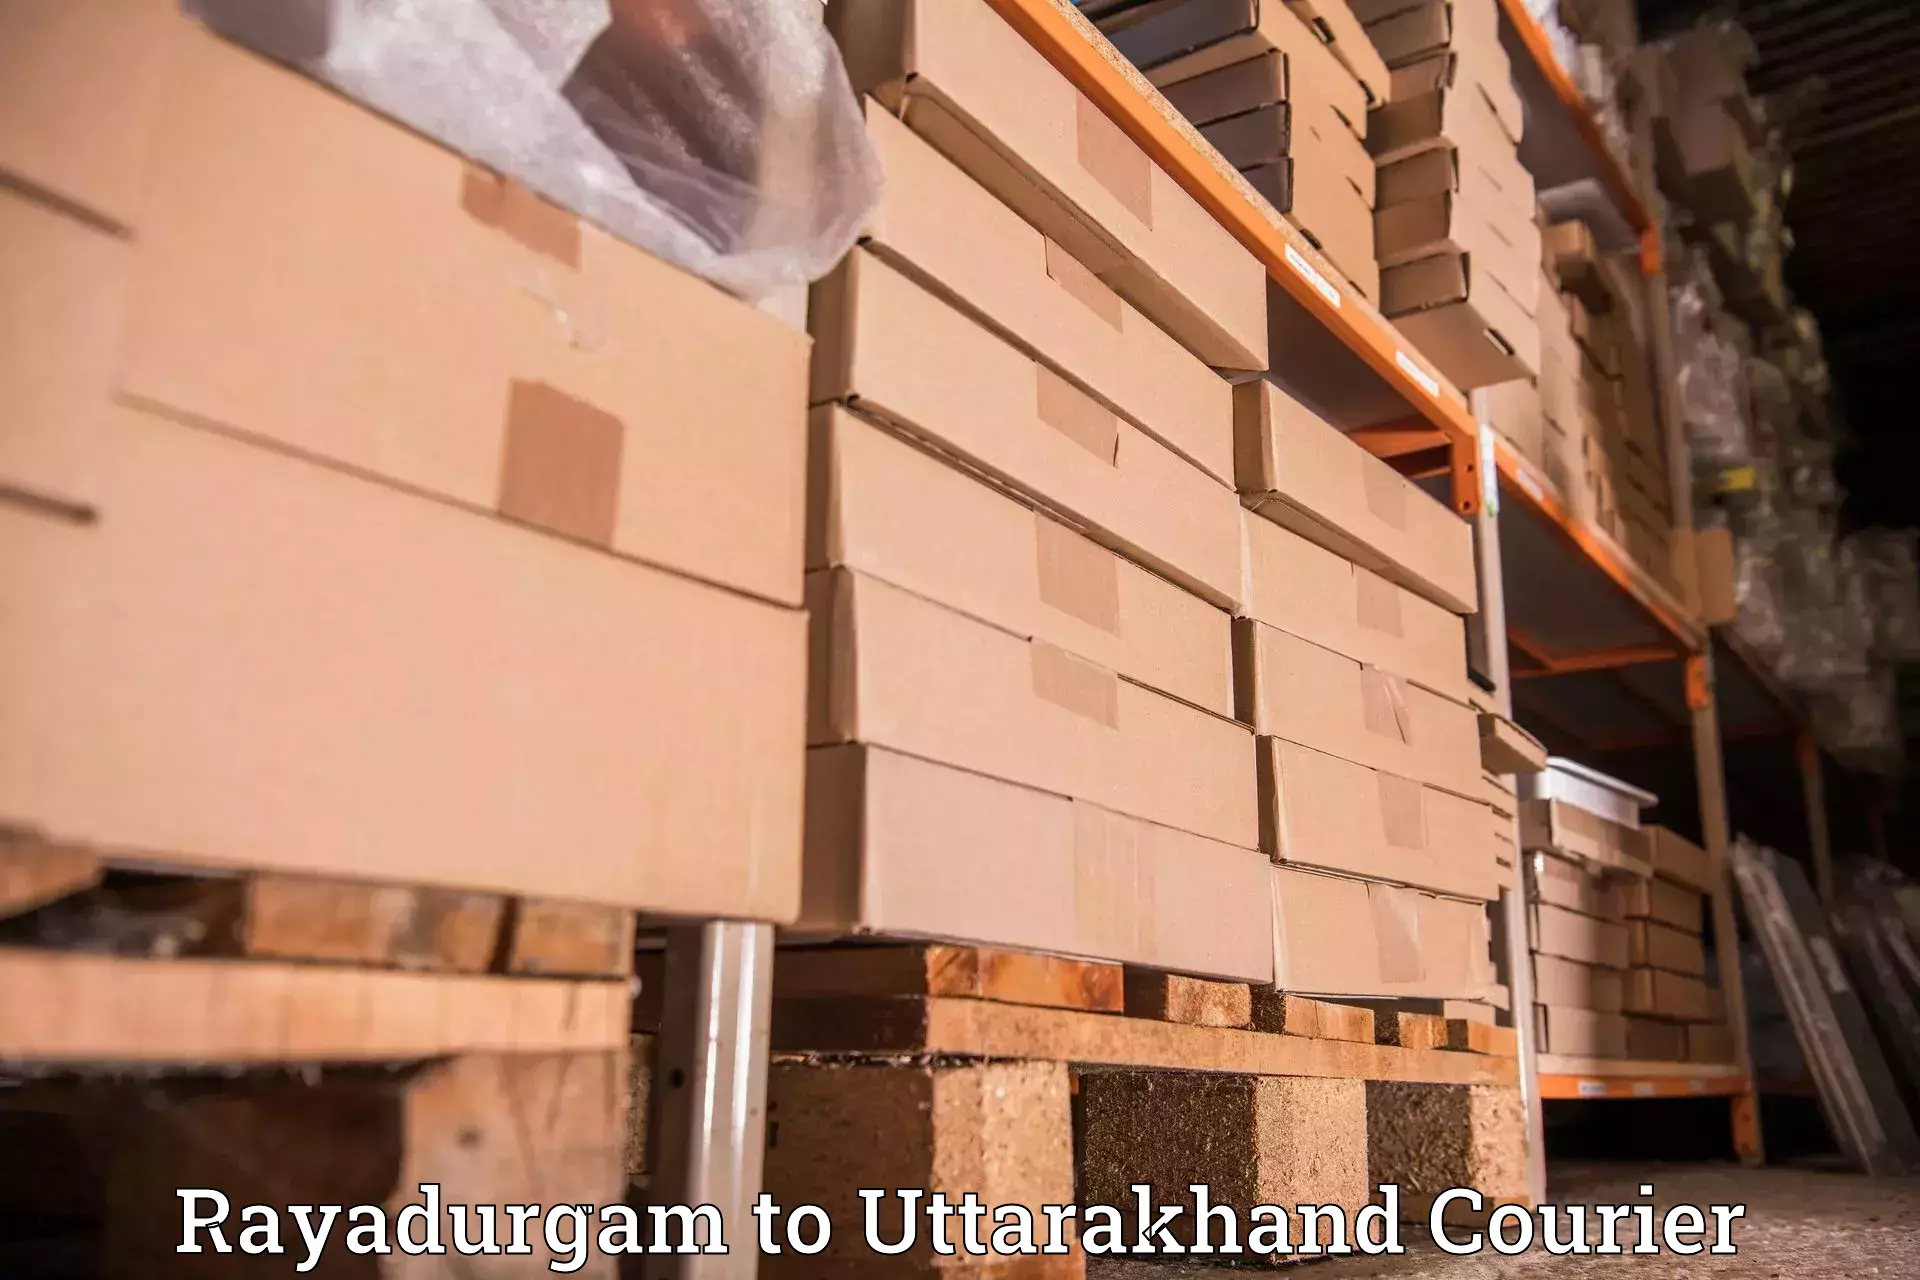 Seamless shipping experience Rayadurgam to Rudrapur